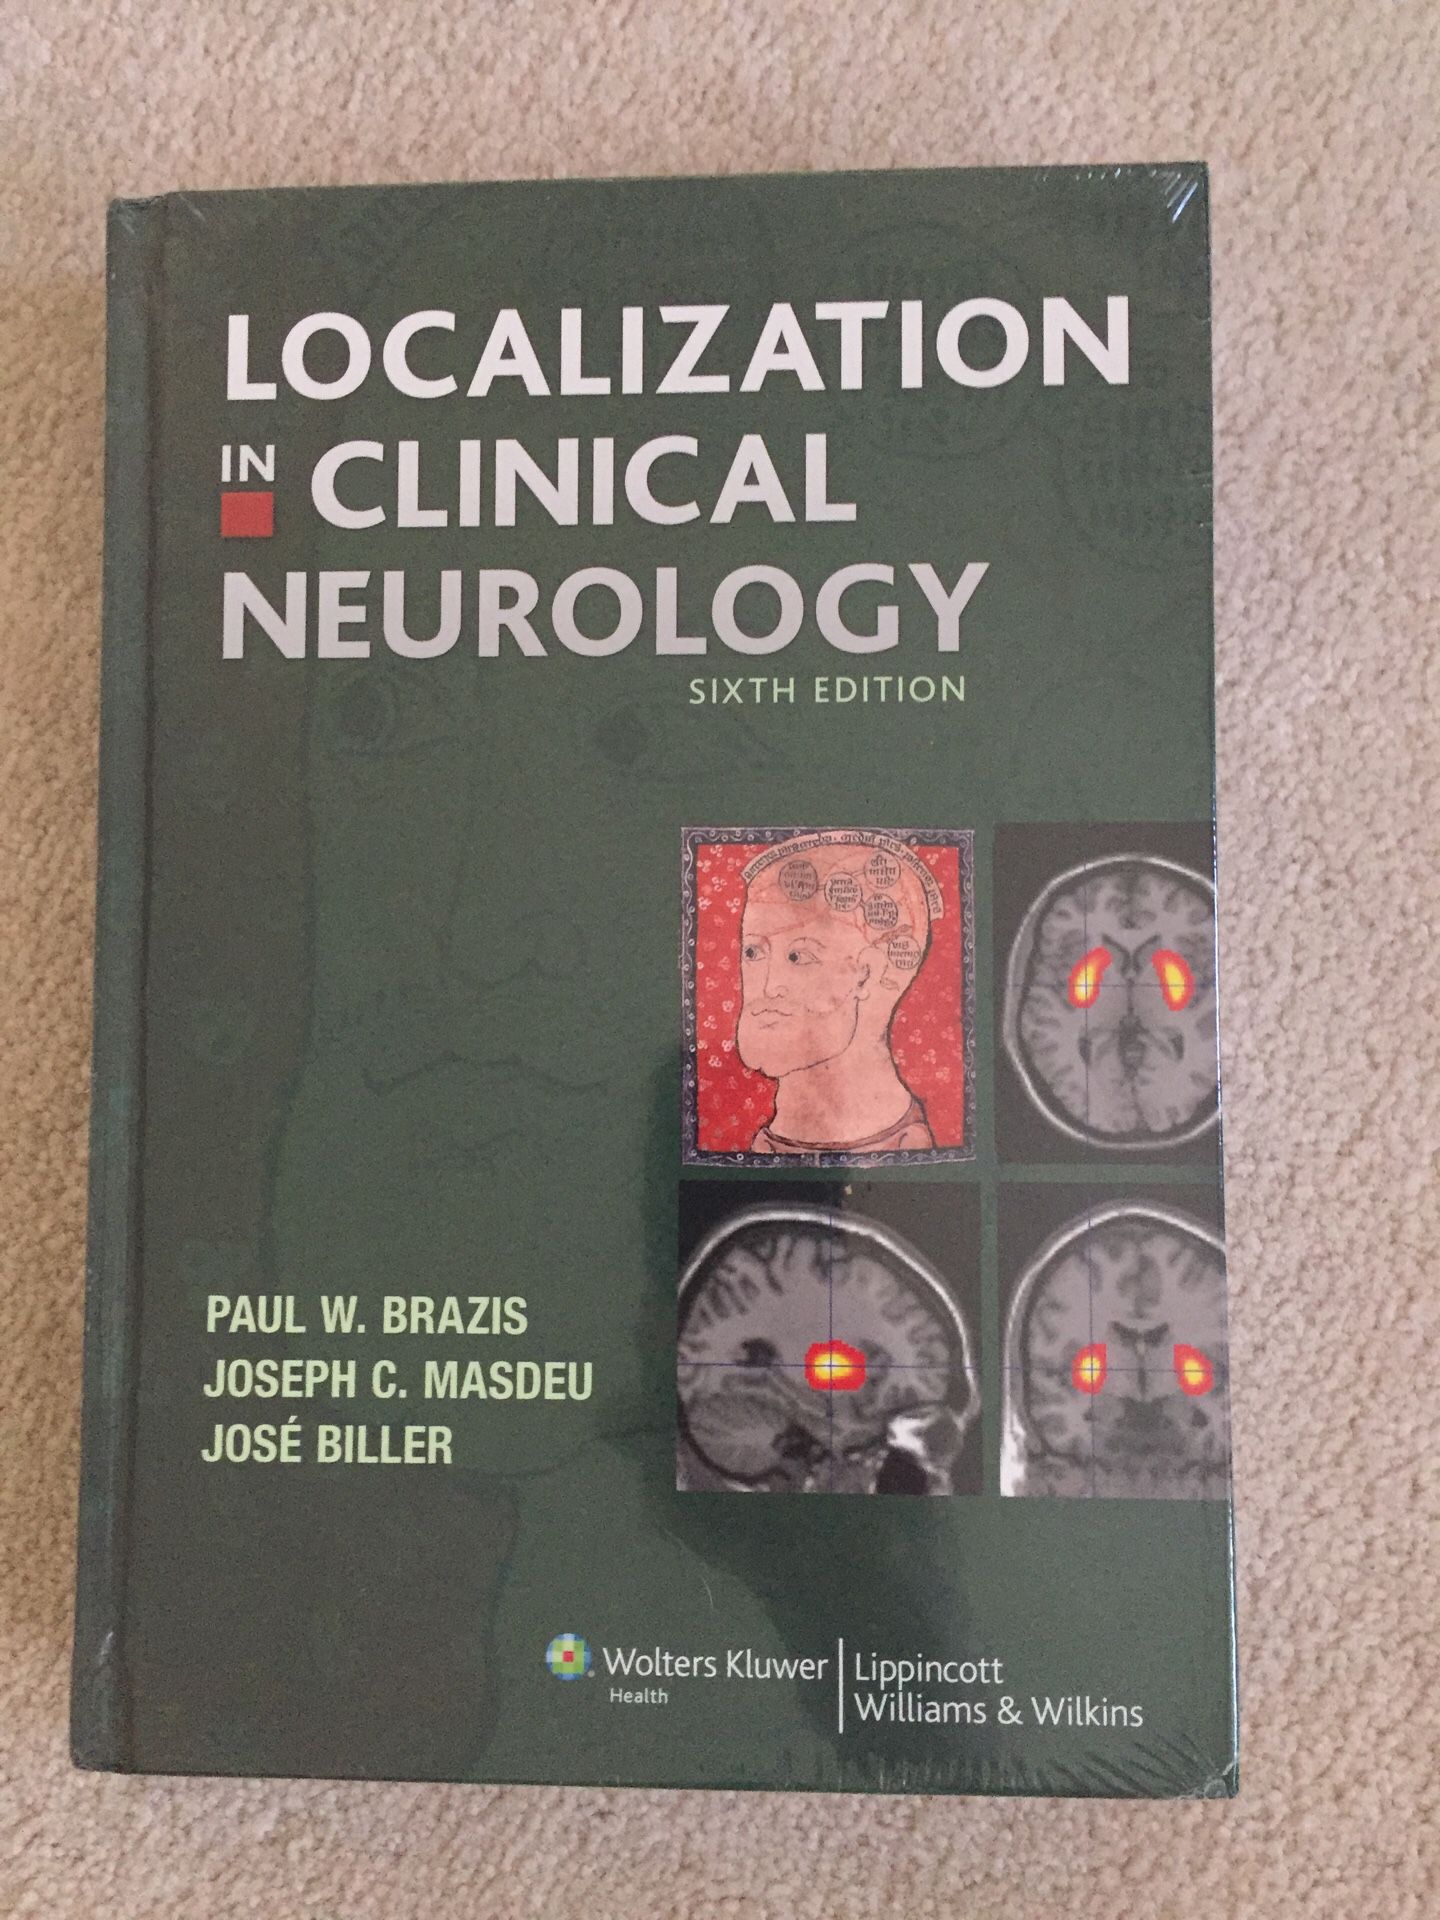 Localization in clinical neurology.